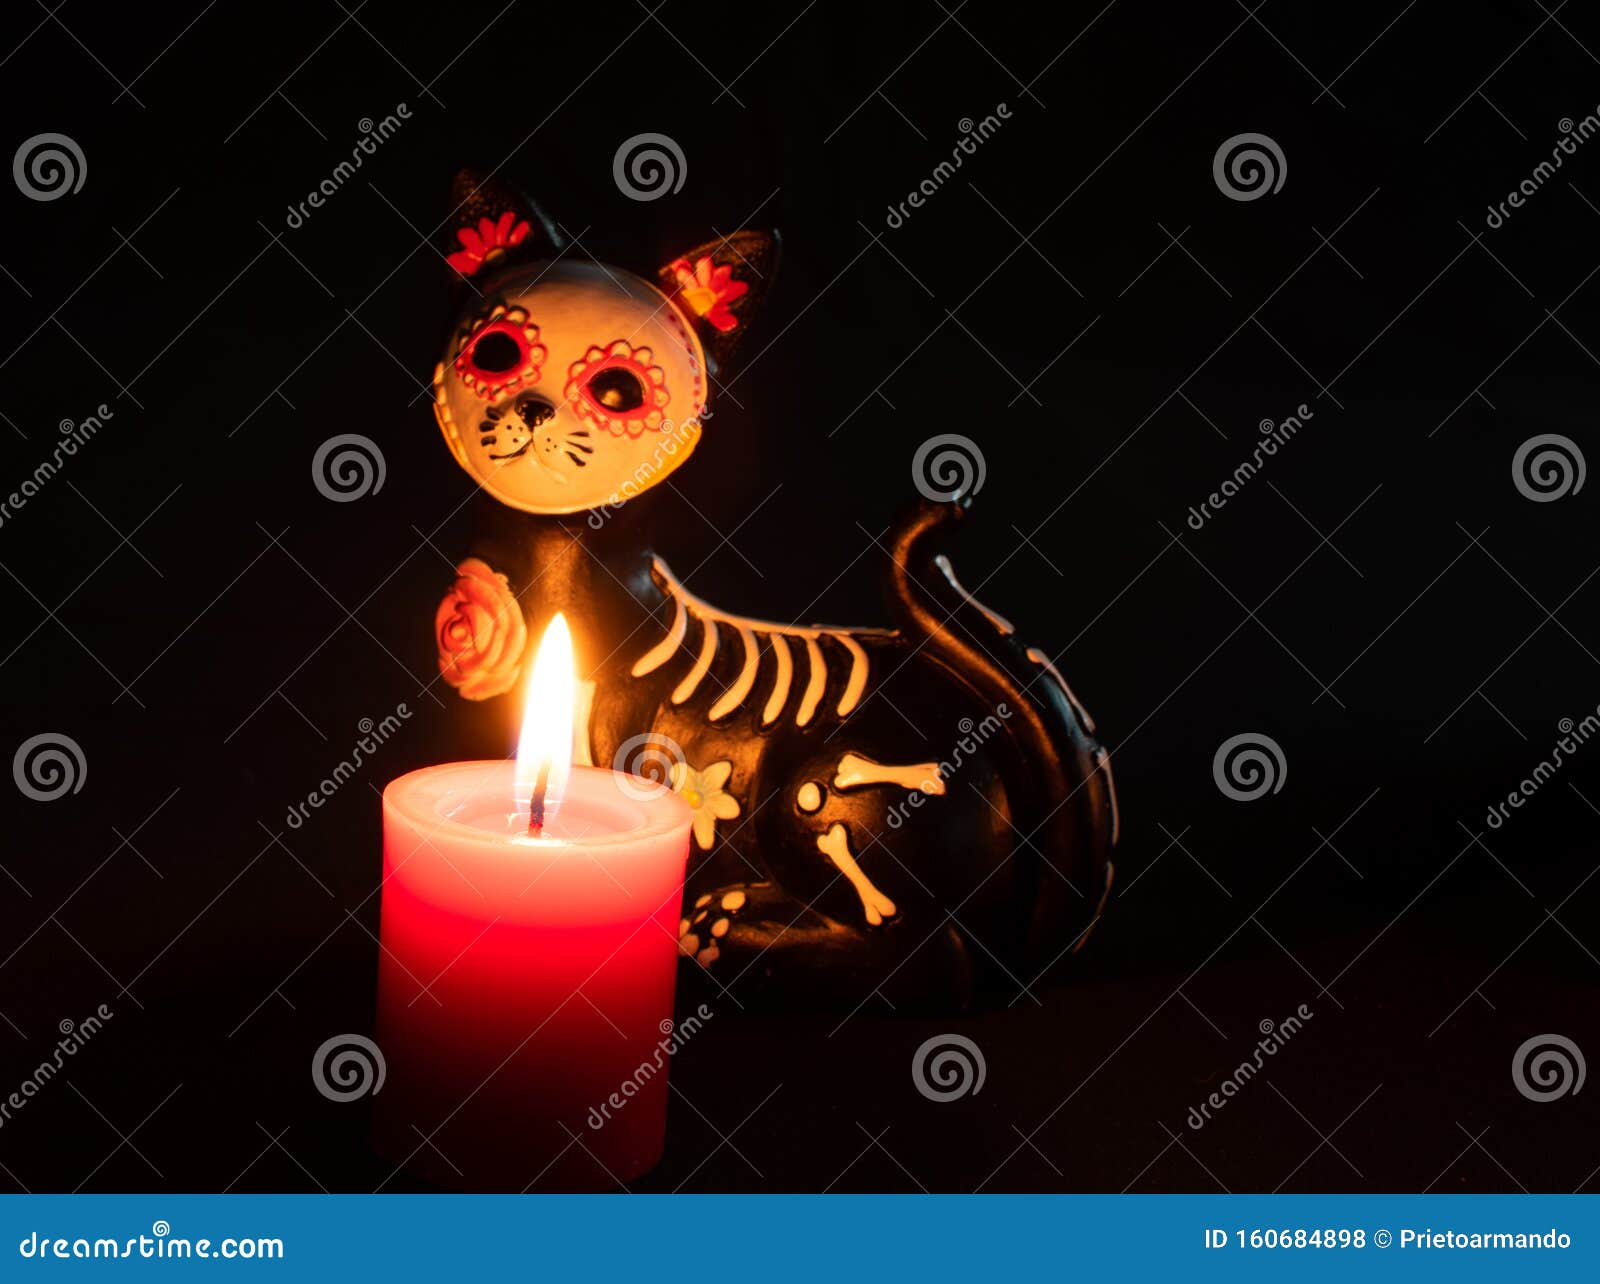 halloween dead cat katrina pan muerto candles velas white red darkness